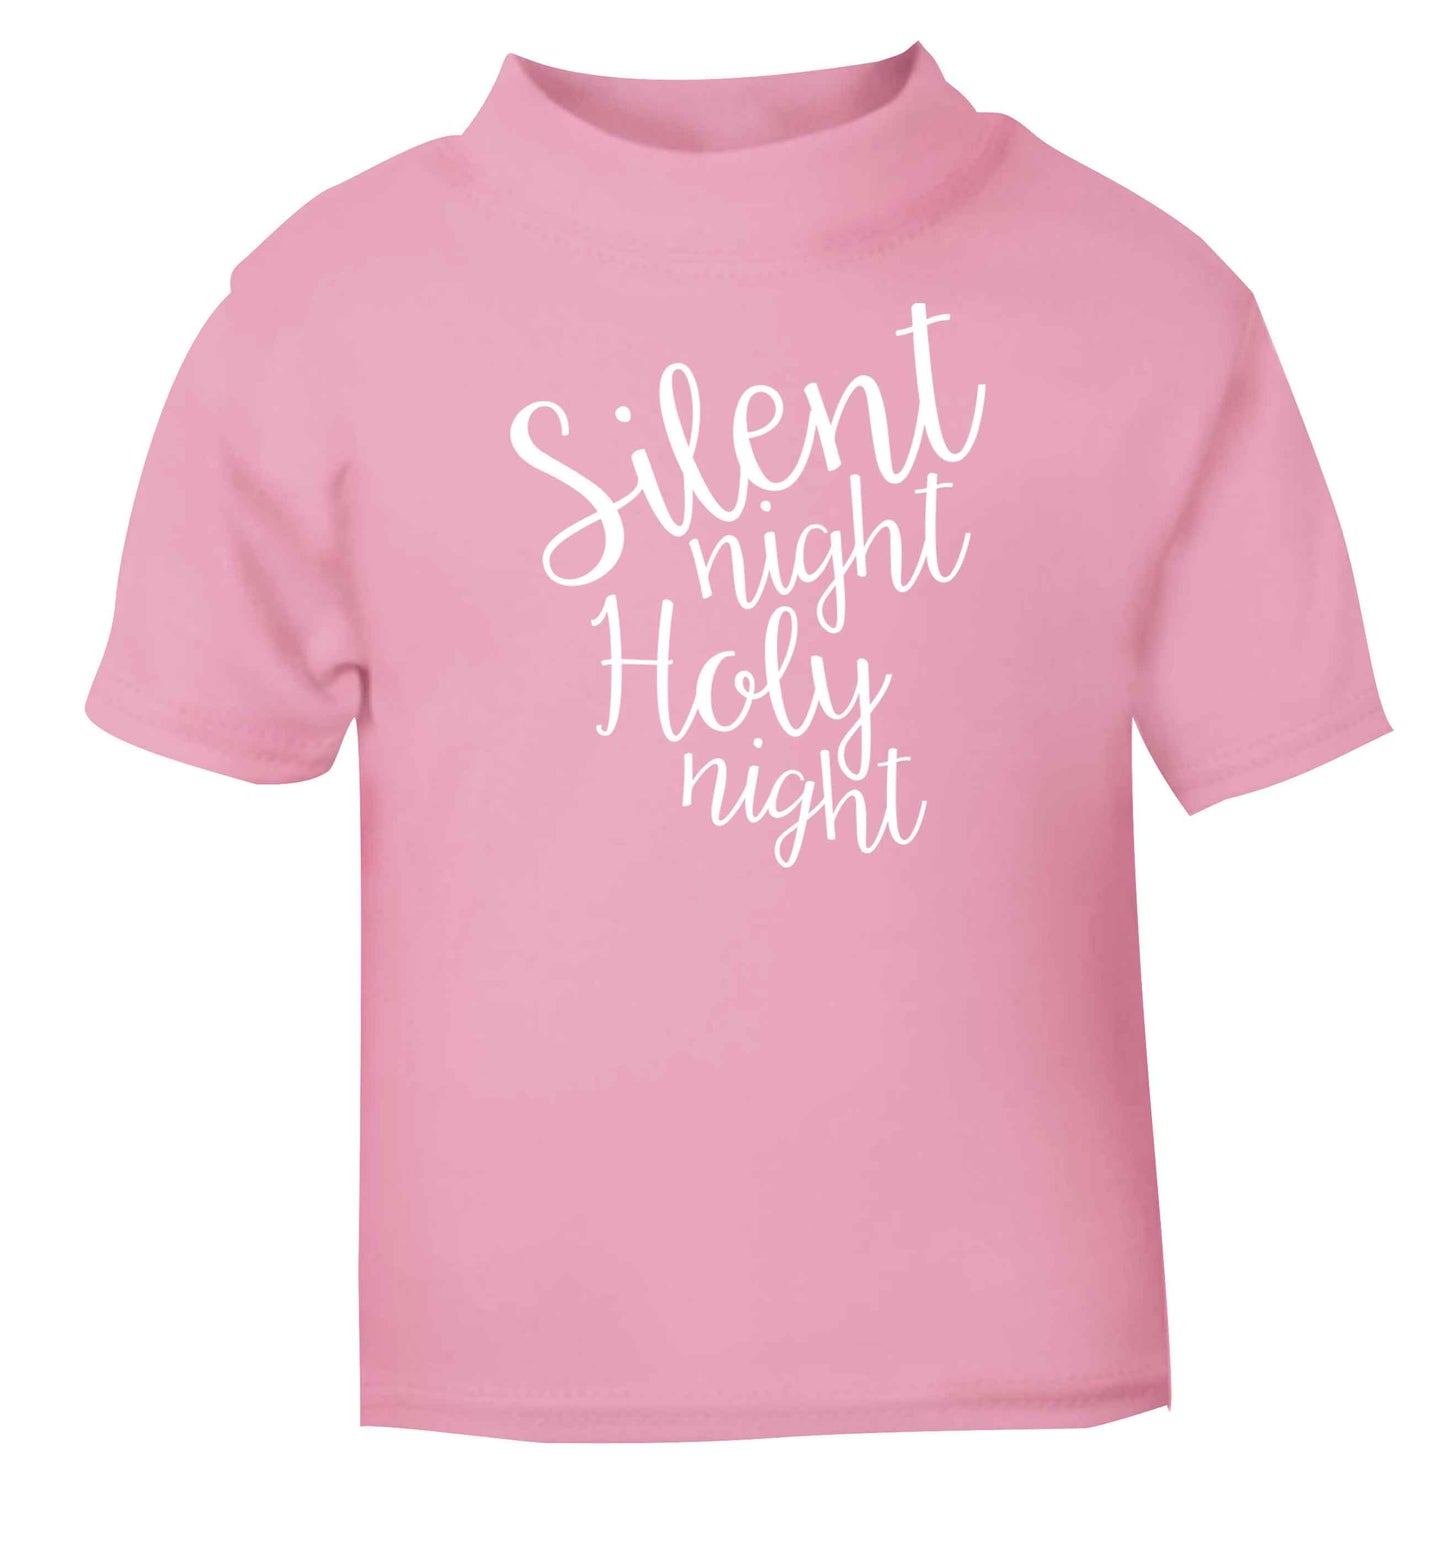 Silent night holy night light pink baby toddler Tshirt 2 Years